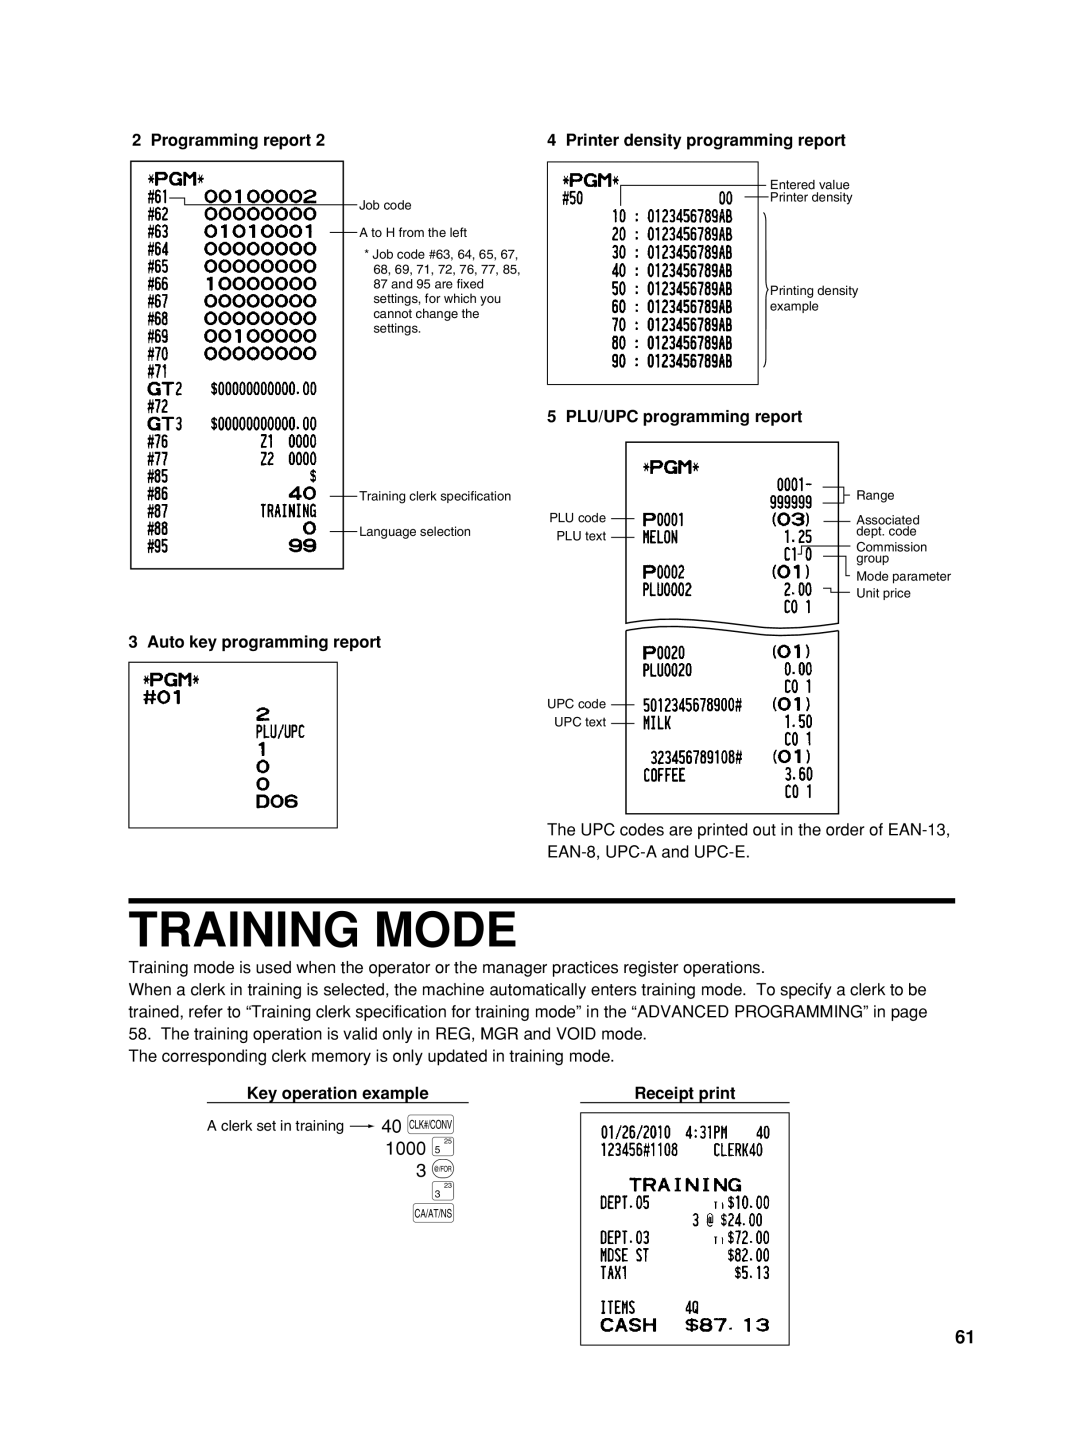 Sharp XE-A42S Training Mode, 3 @ £ A, Programming report, Printer density programming report, Auto key programming report 